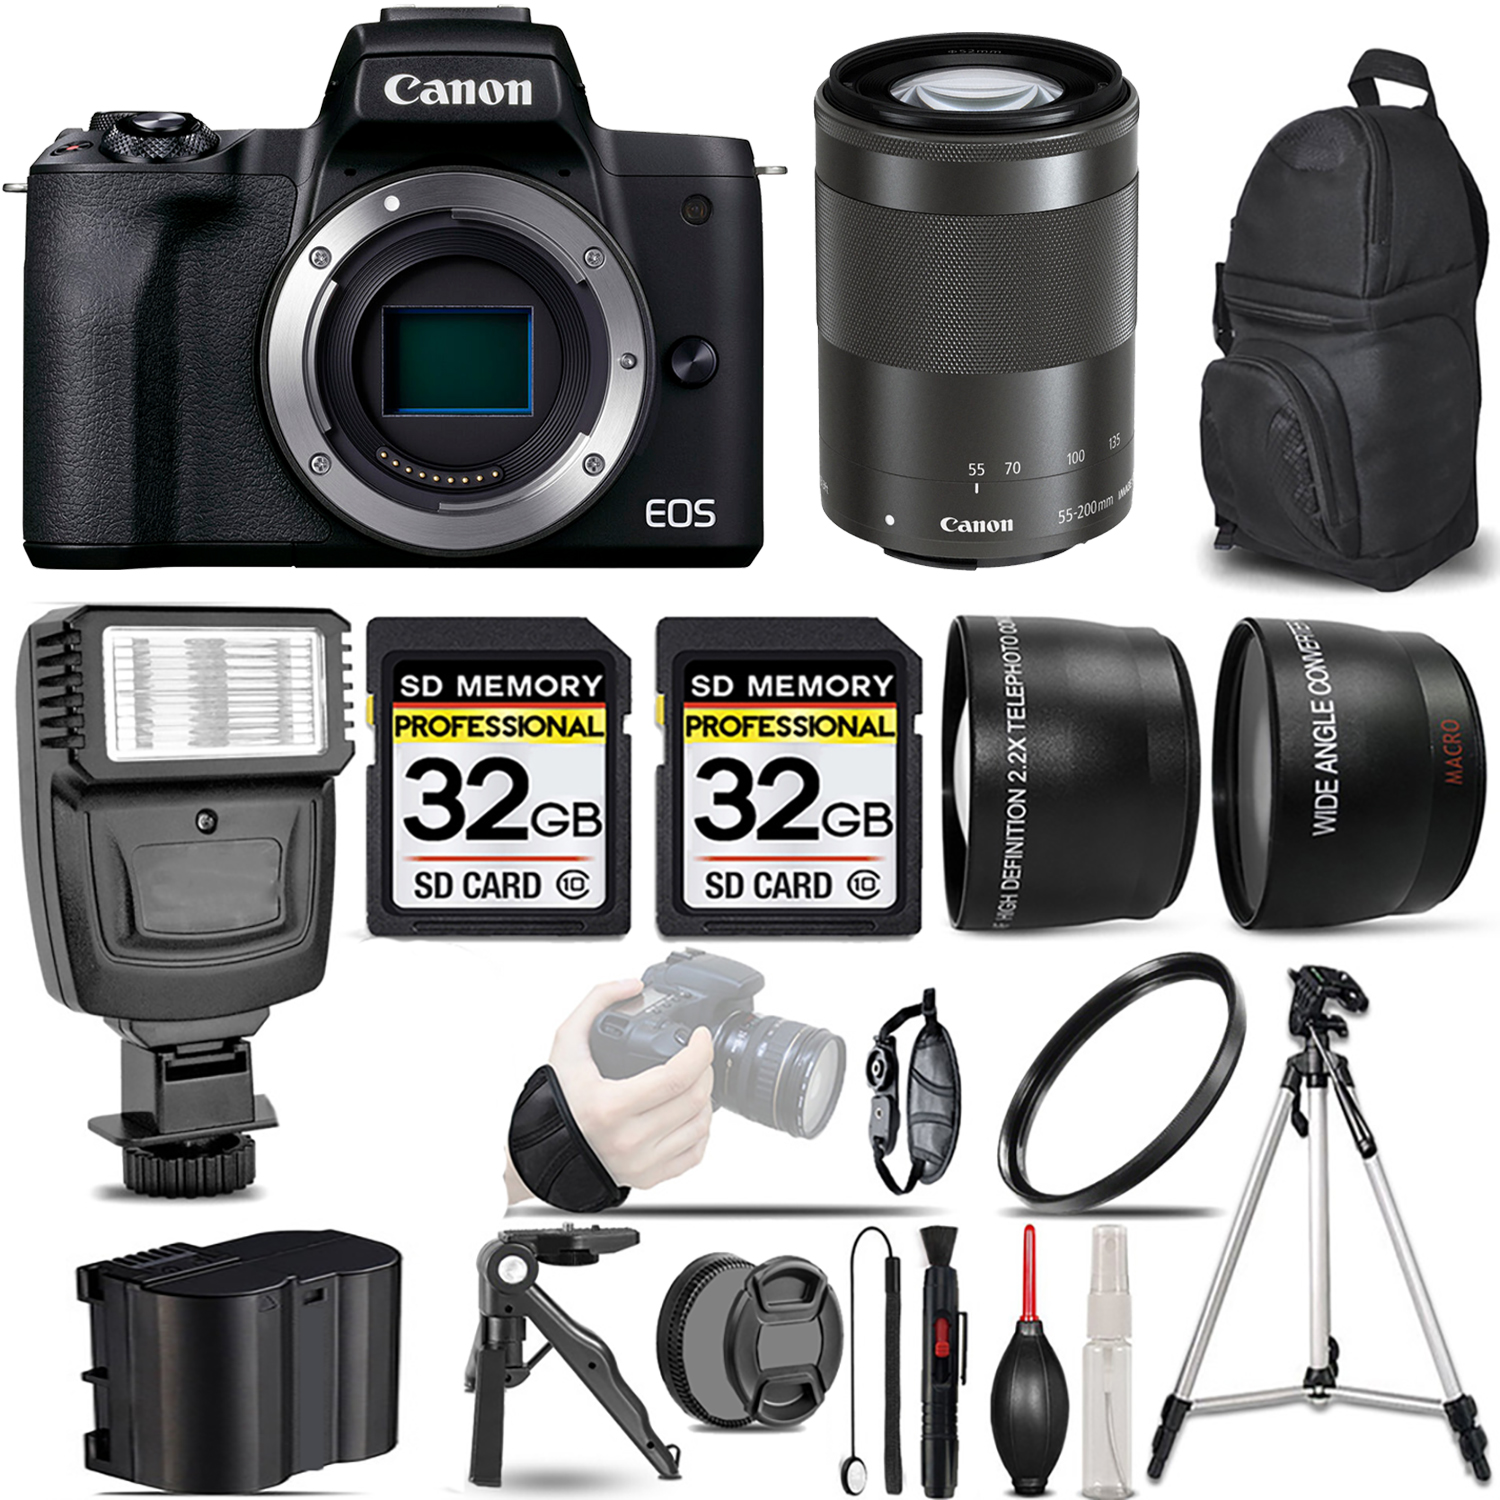 EOS M50 Mark II (Black) + 55-200mm f/4.5-6.3 IS STM Lens (Black) + Flash + 64GB *FREE SHIPPING*